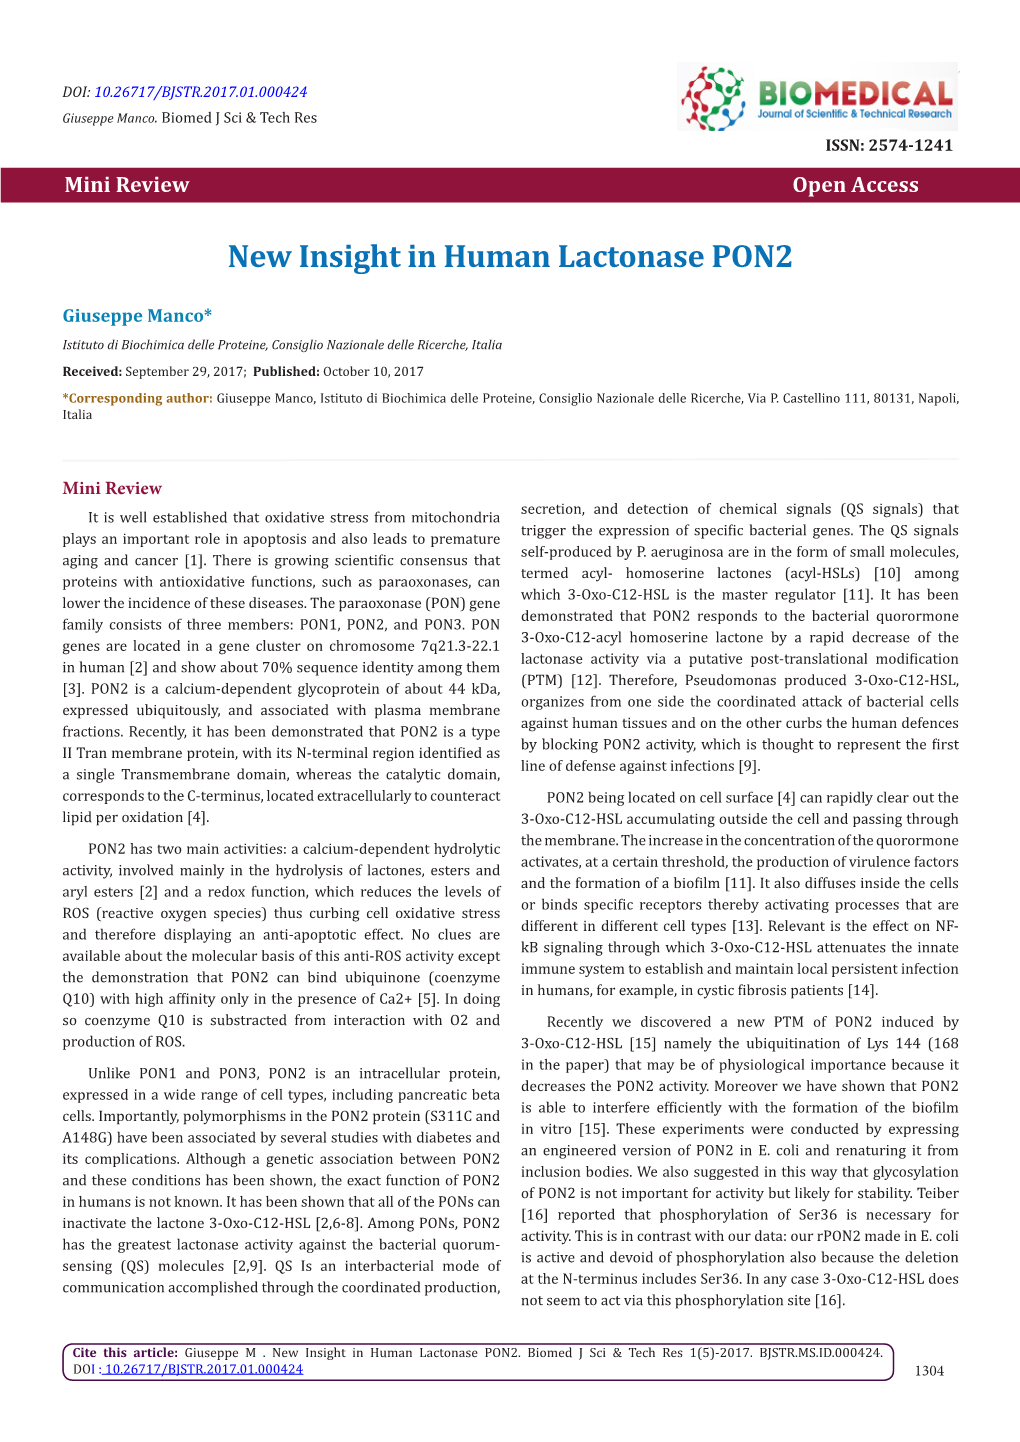 New Insight in Human Lactonase PON2